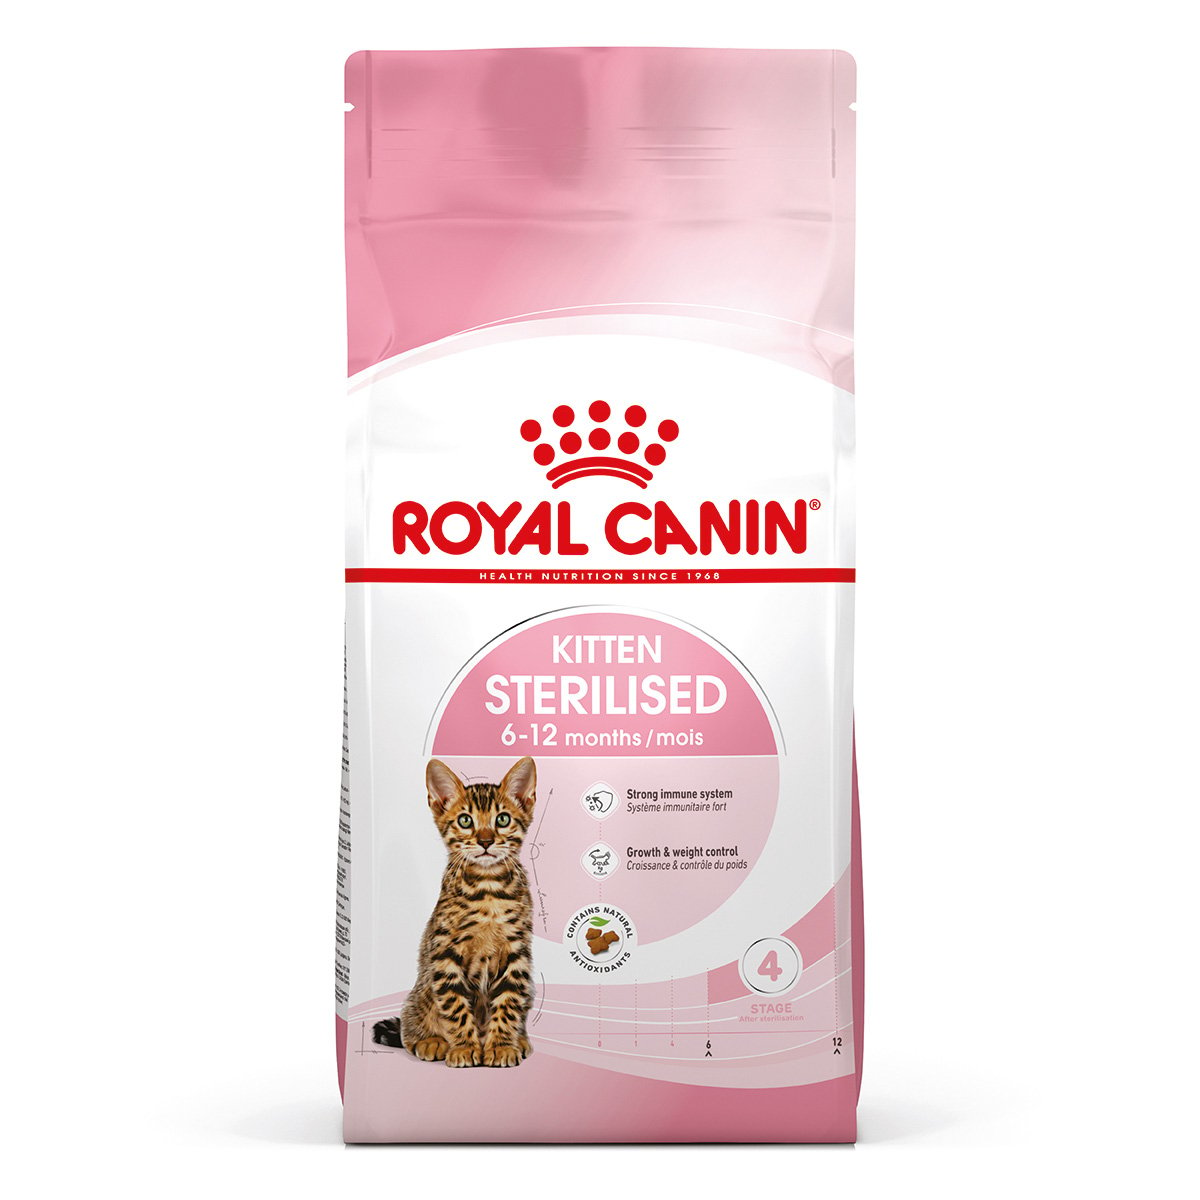 ROYAL CANIN KITTEN Sterilised Kittenfutter für kastrierte Kätzchen 3,5kg von Royal Canin